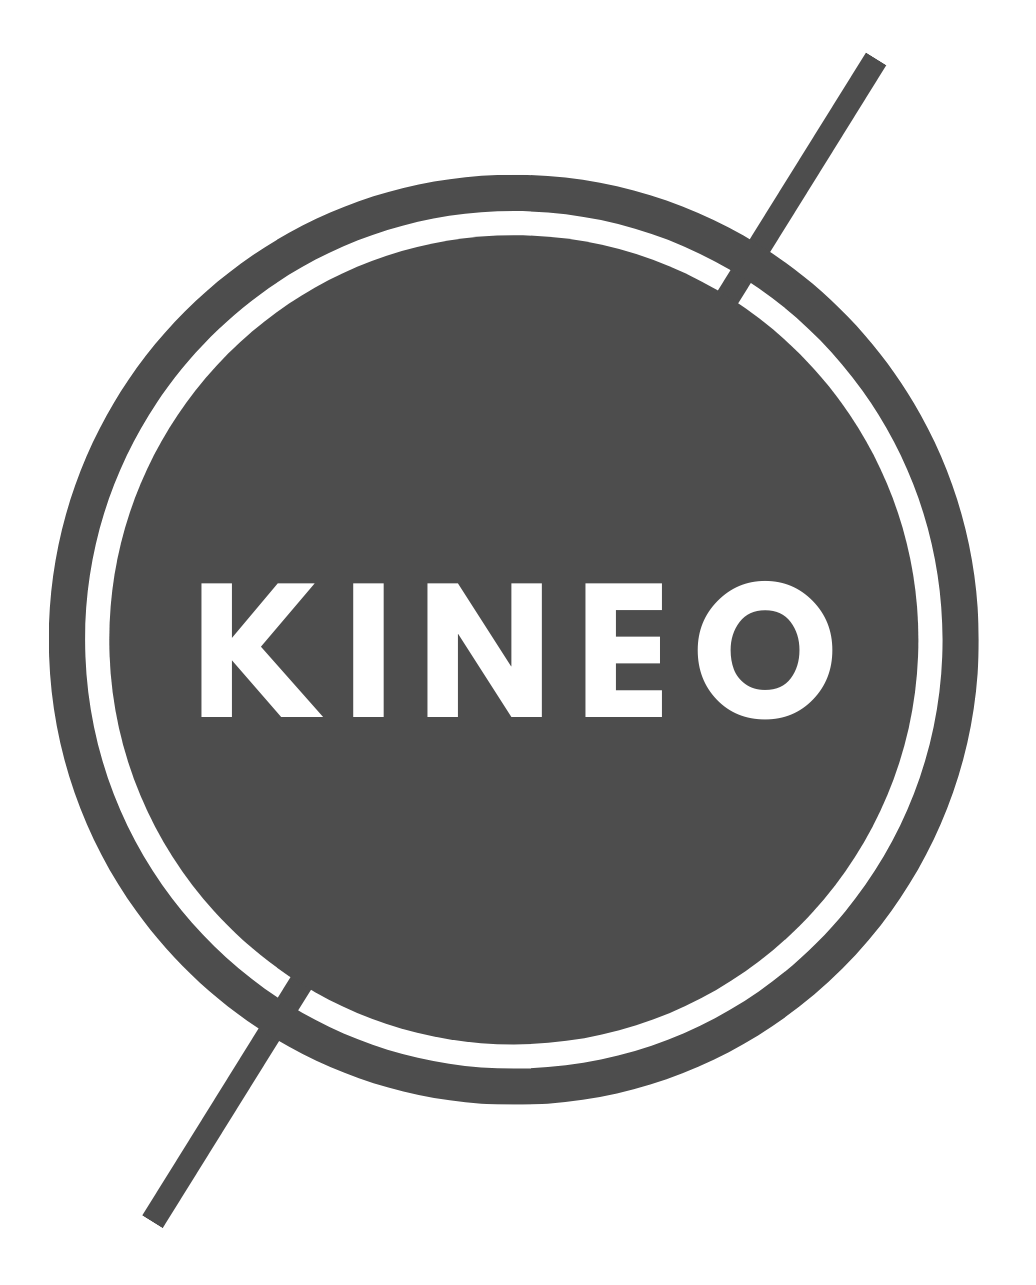 The Kineo Center logo